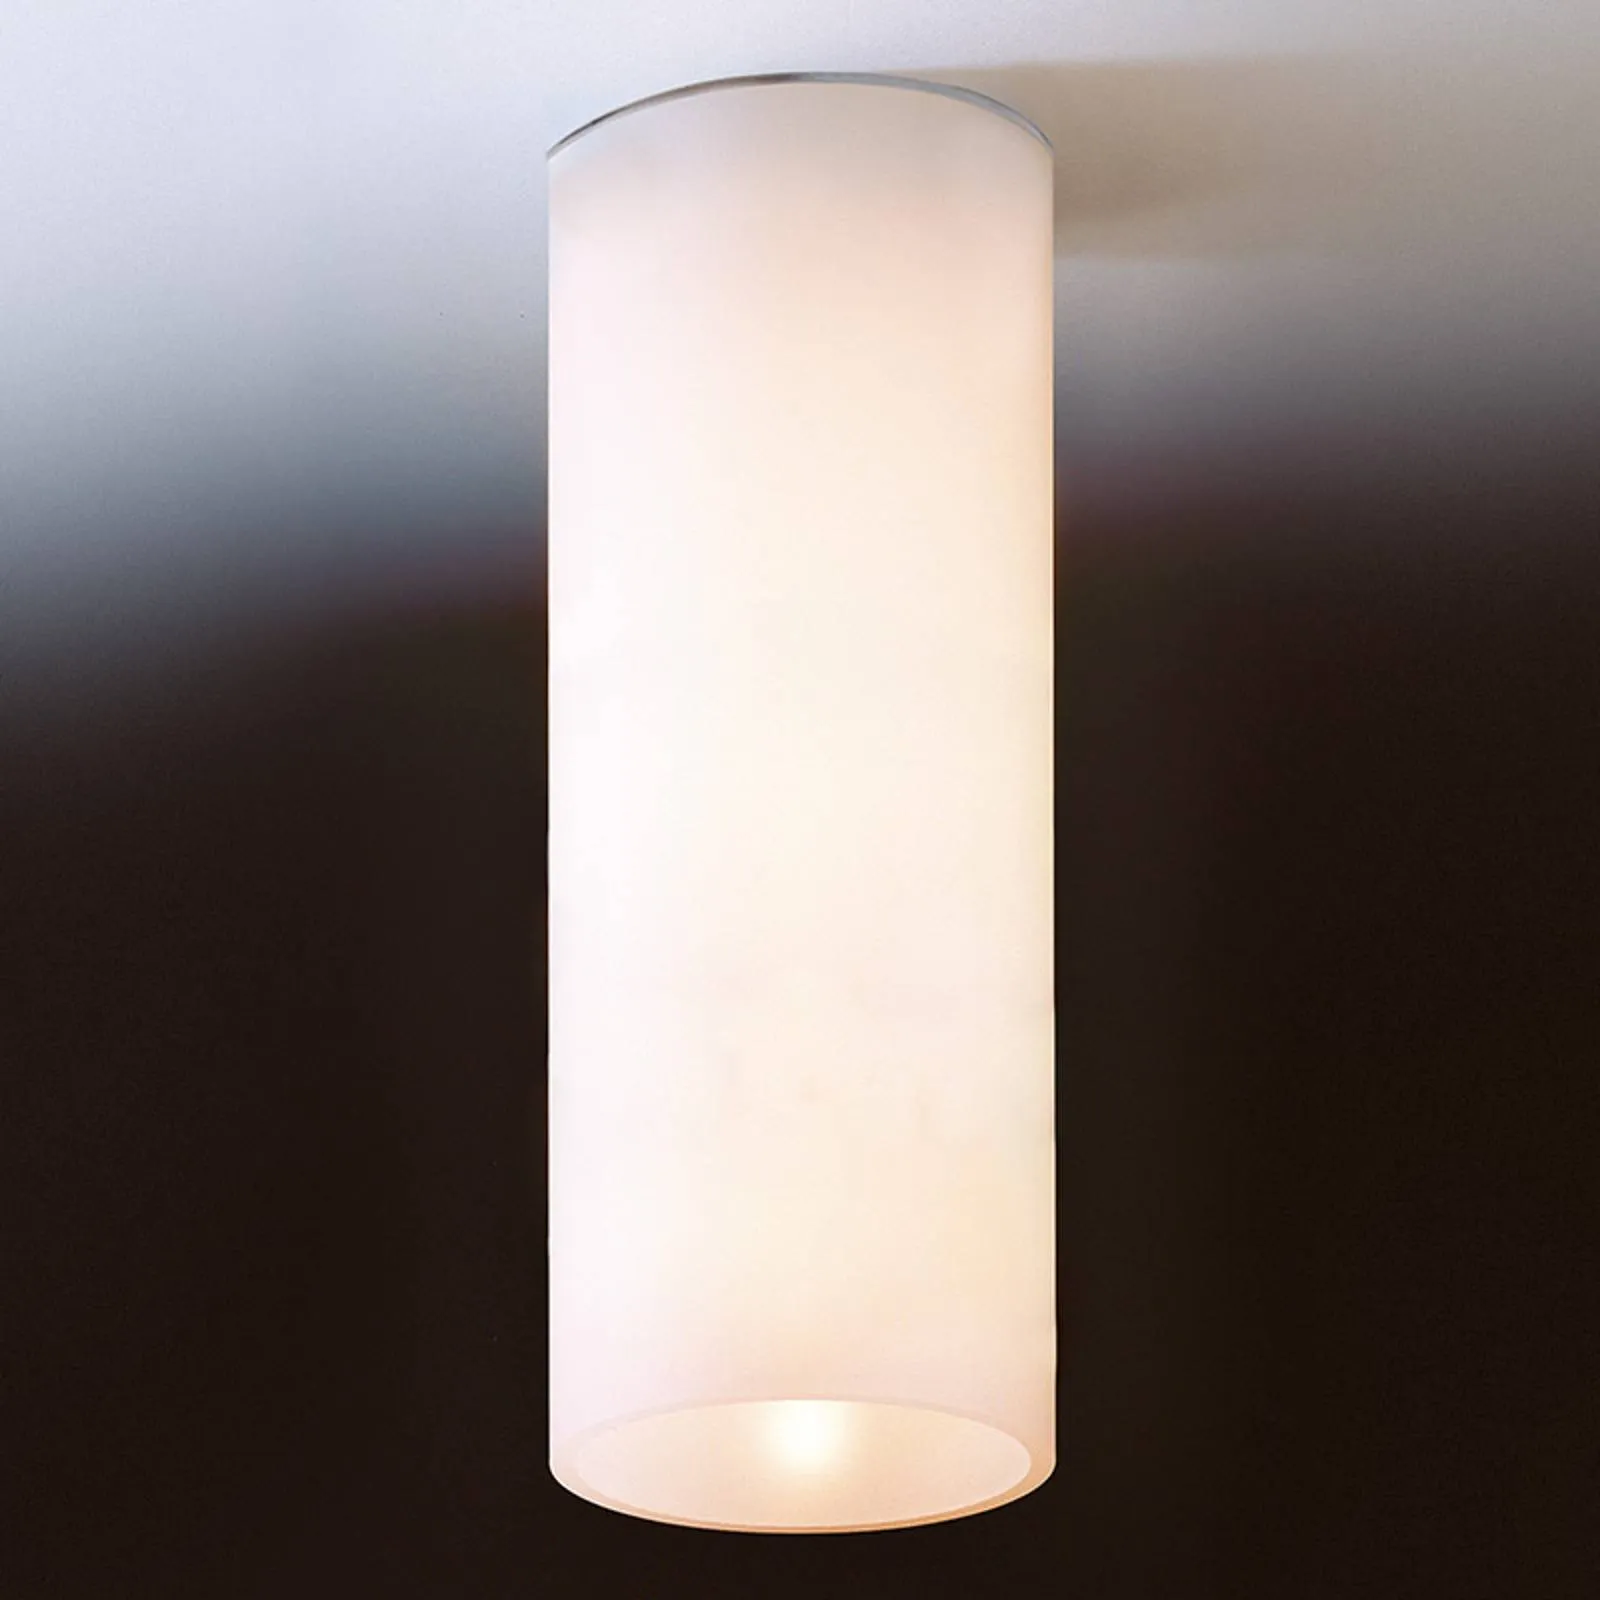 Simple ceiling light DELA made of white glass